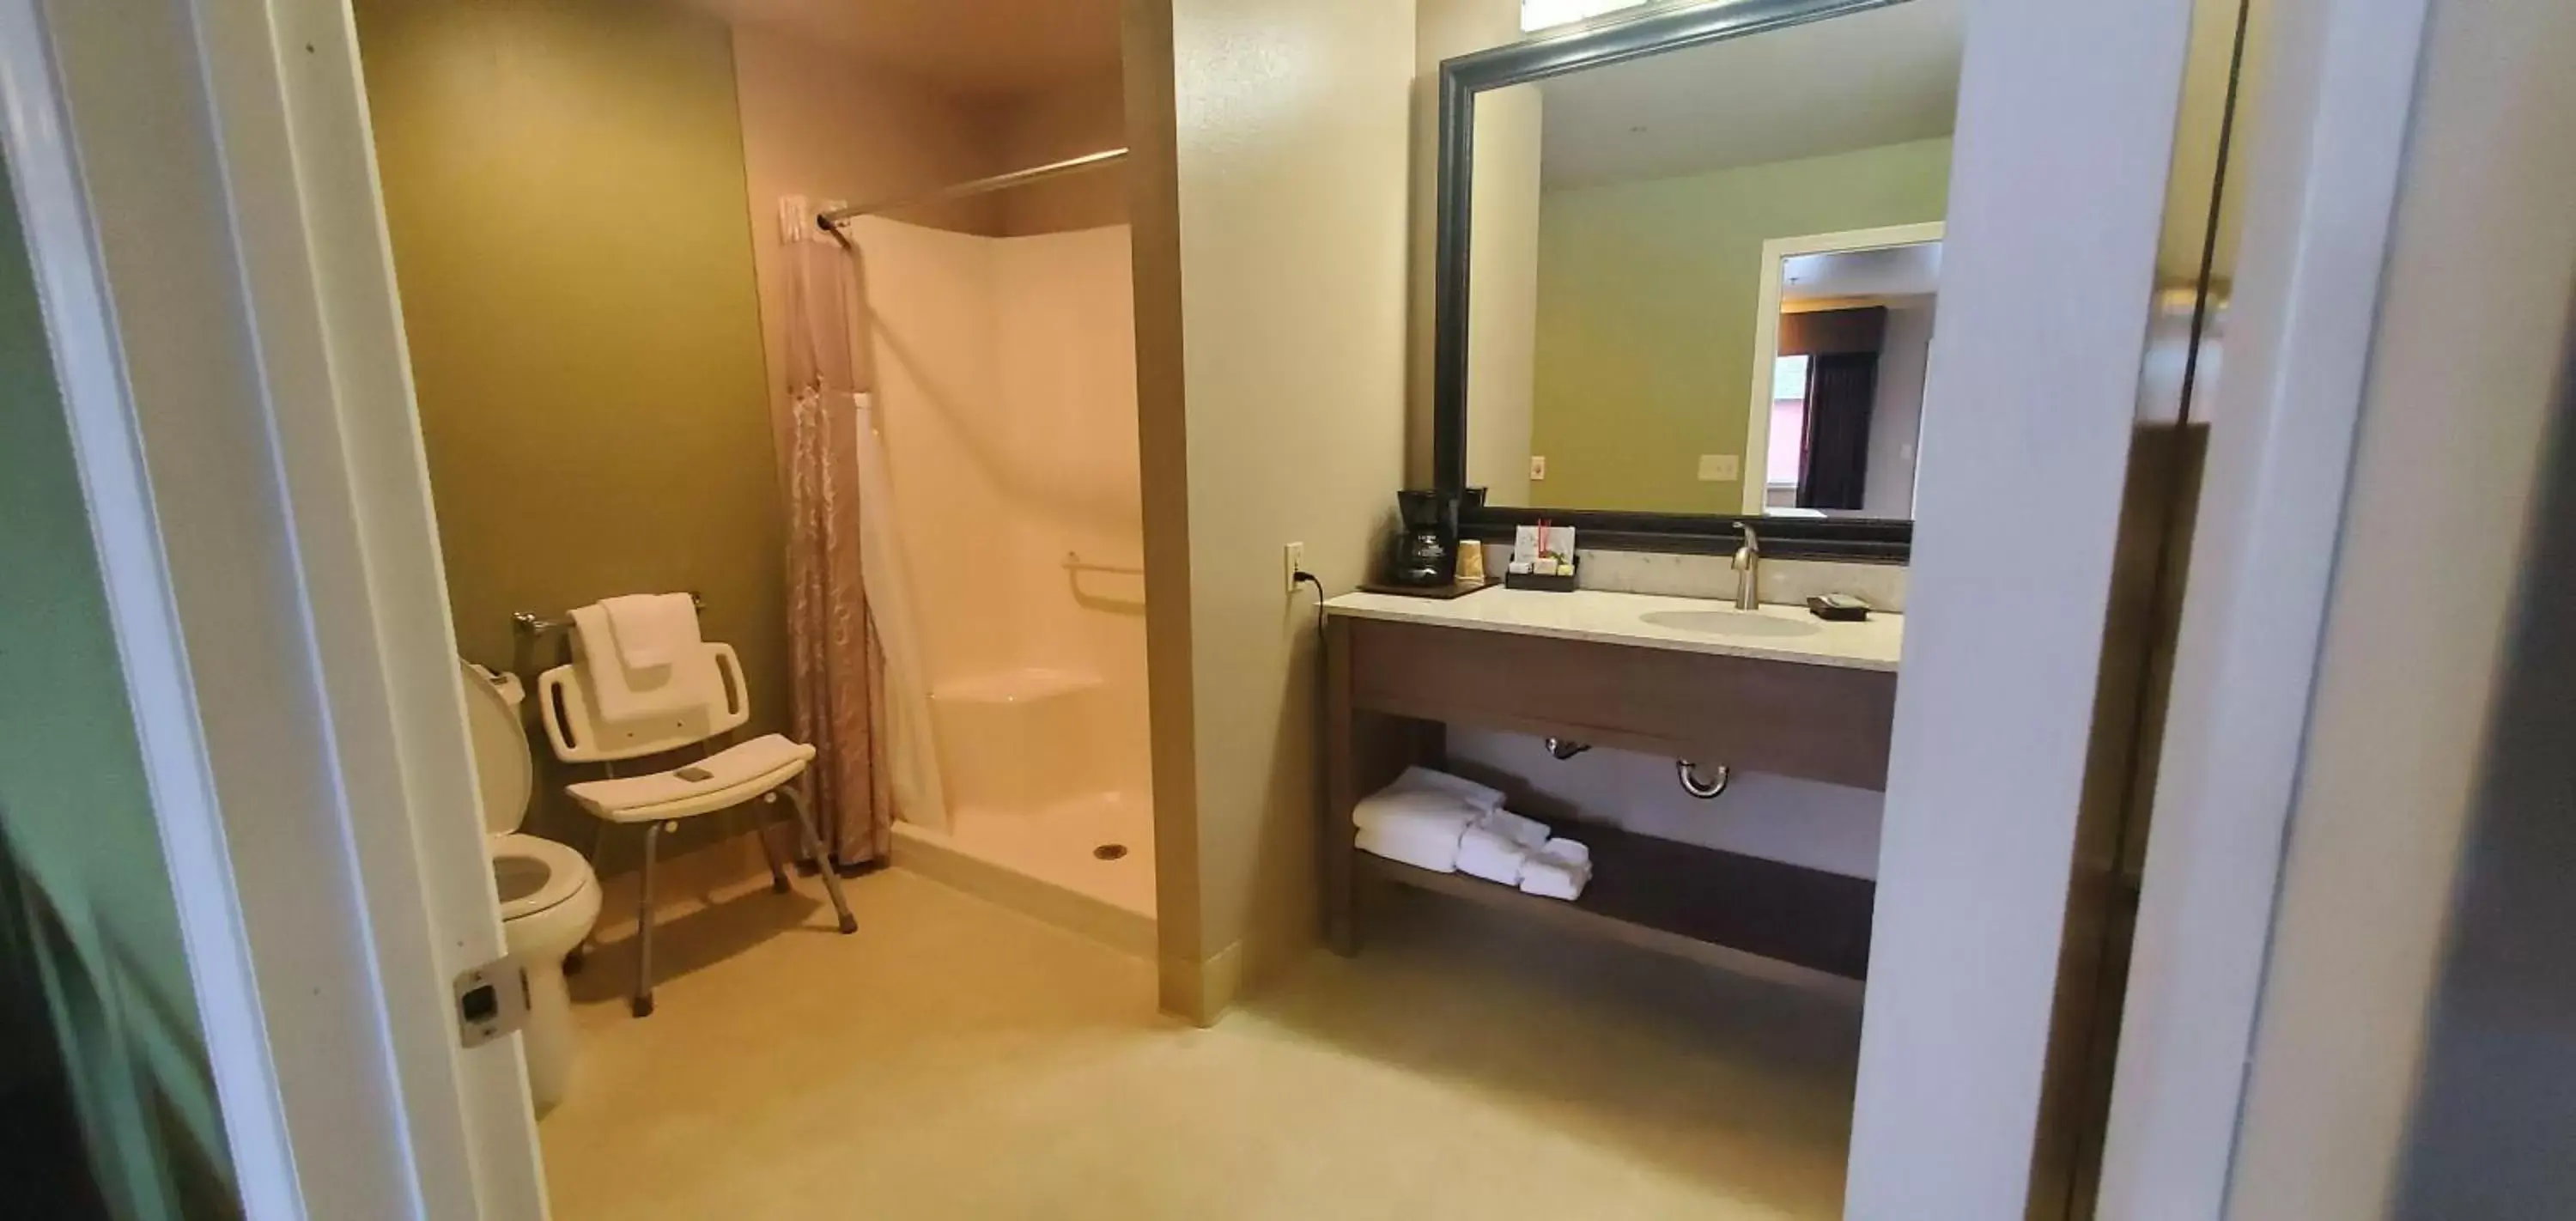 Bathroom in Pacific Inn Motel